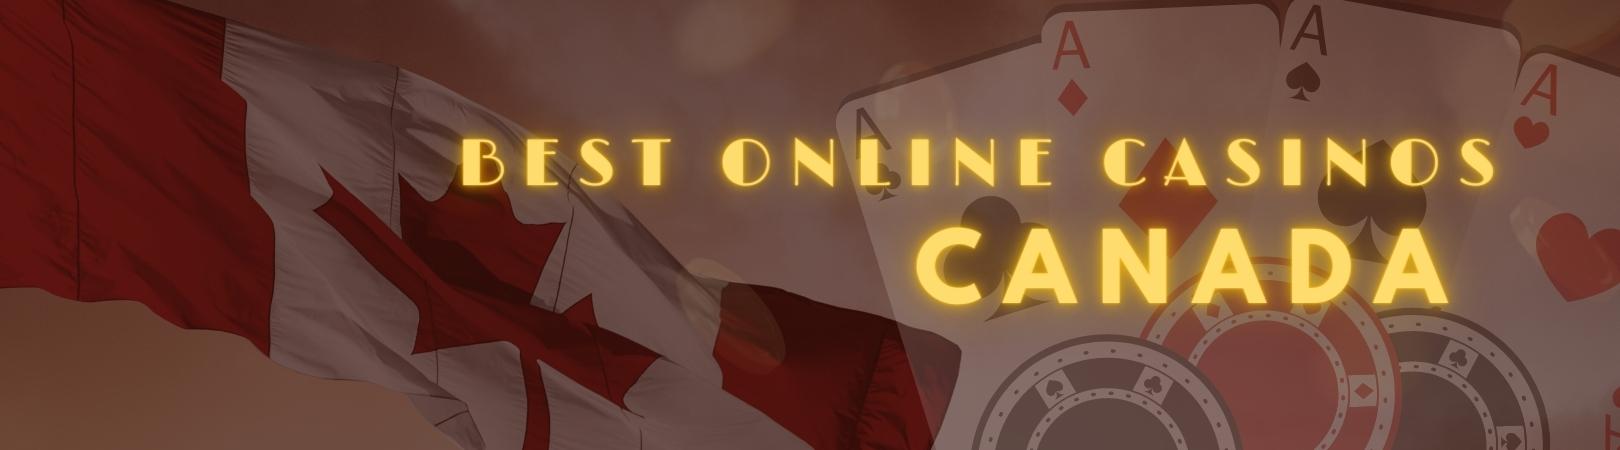 best online casinos Canada img